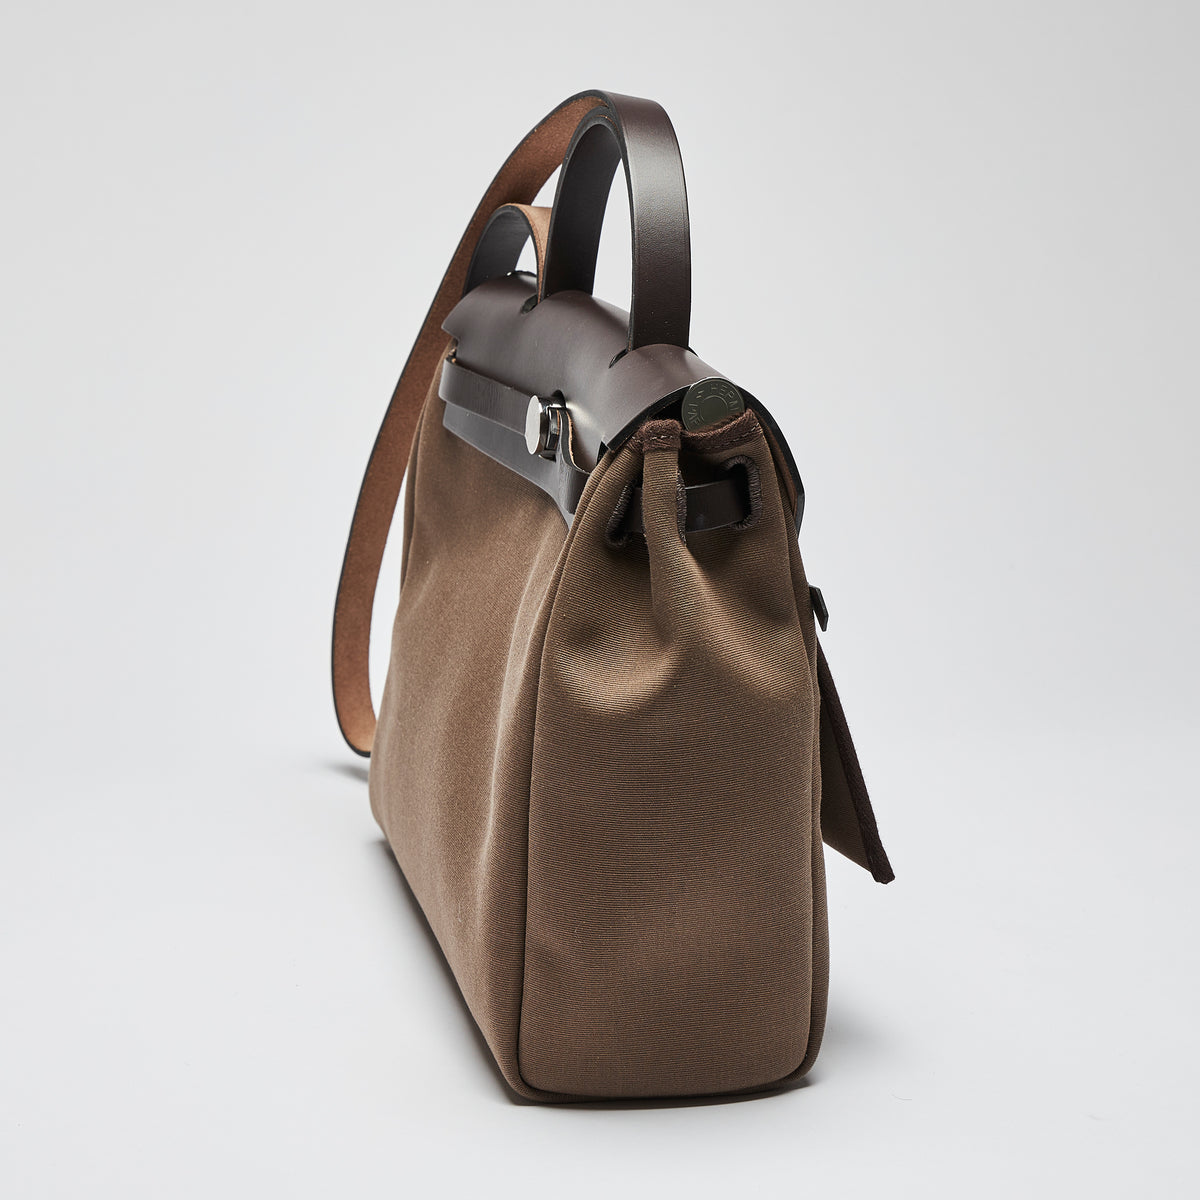 Excellent Pre-Loved Brown Canvas Top Handle Flap Bag with Shoulder Strap. (side)